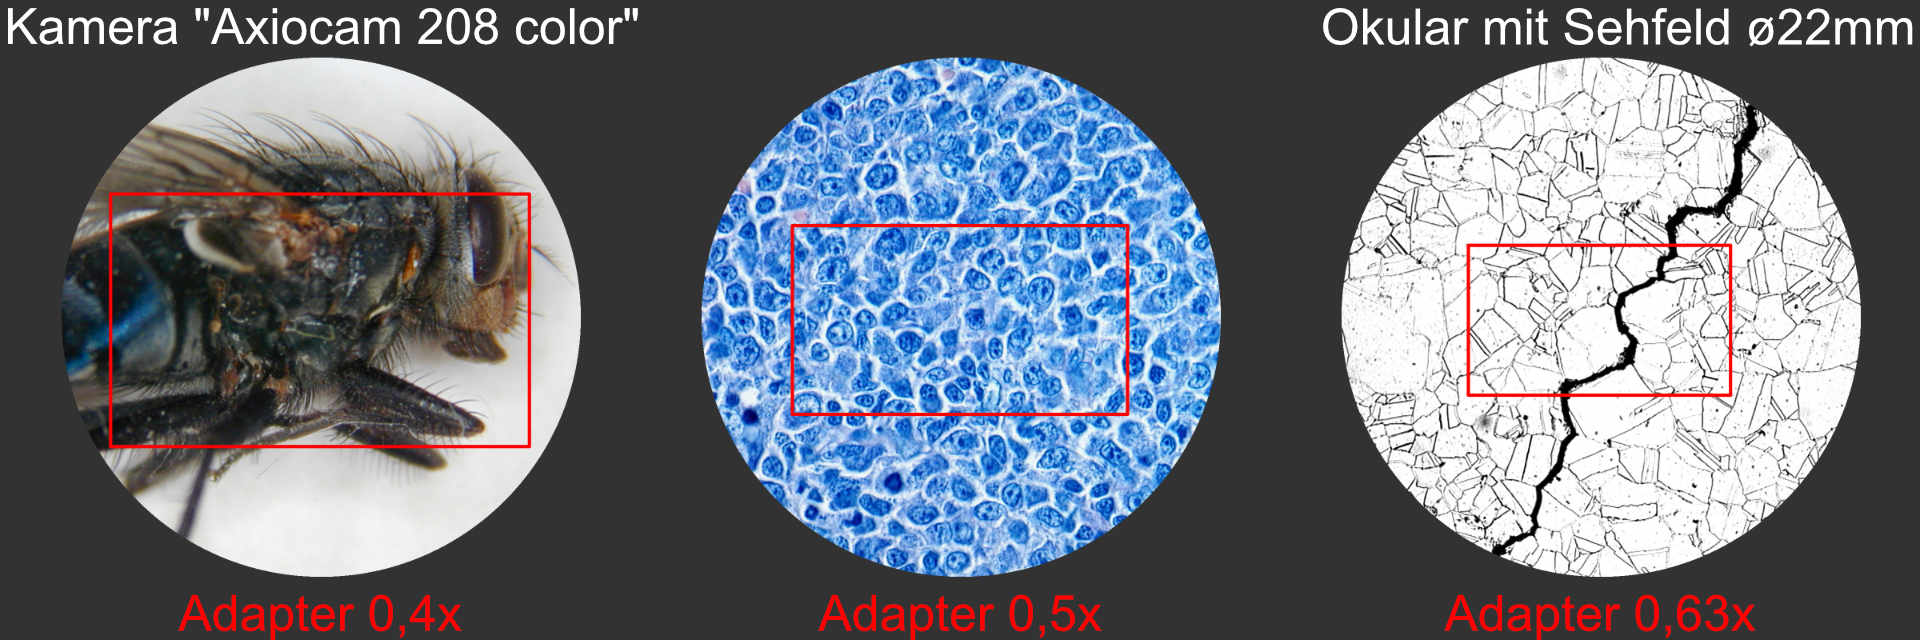 Sehfeld ZEISS "Axiocam 208 color" - "Okular 10x(22)" - "Adapter 0,4x - 0,5x - 0,63x"